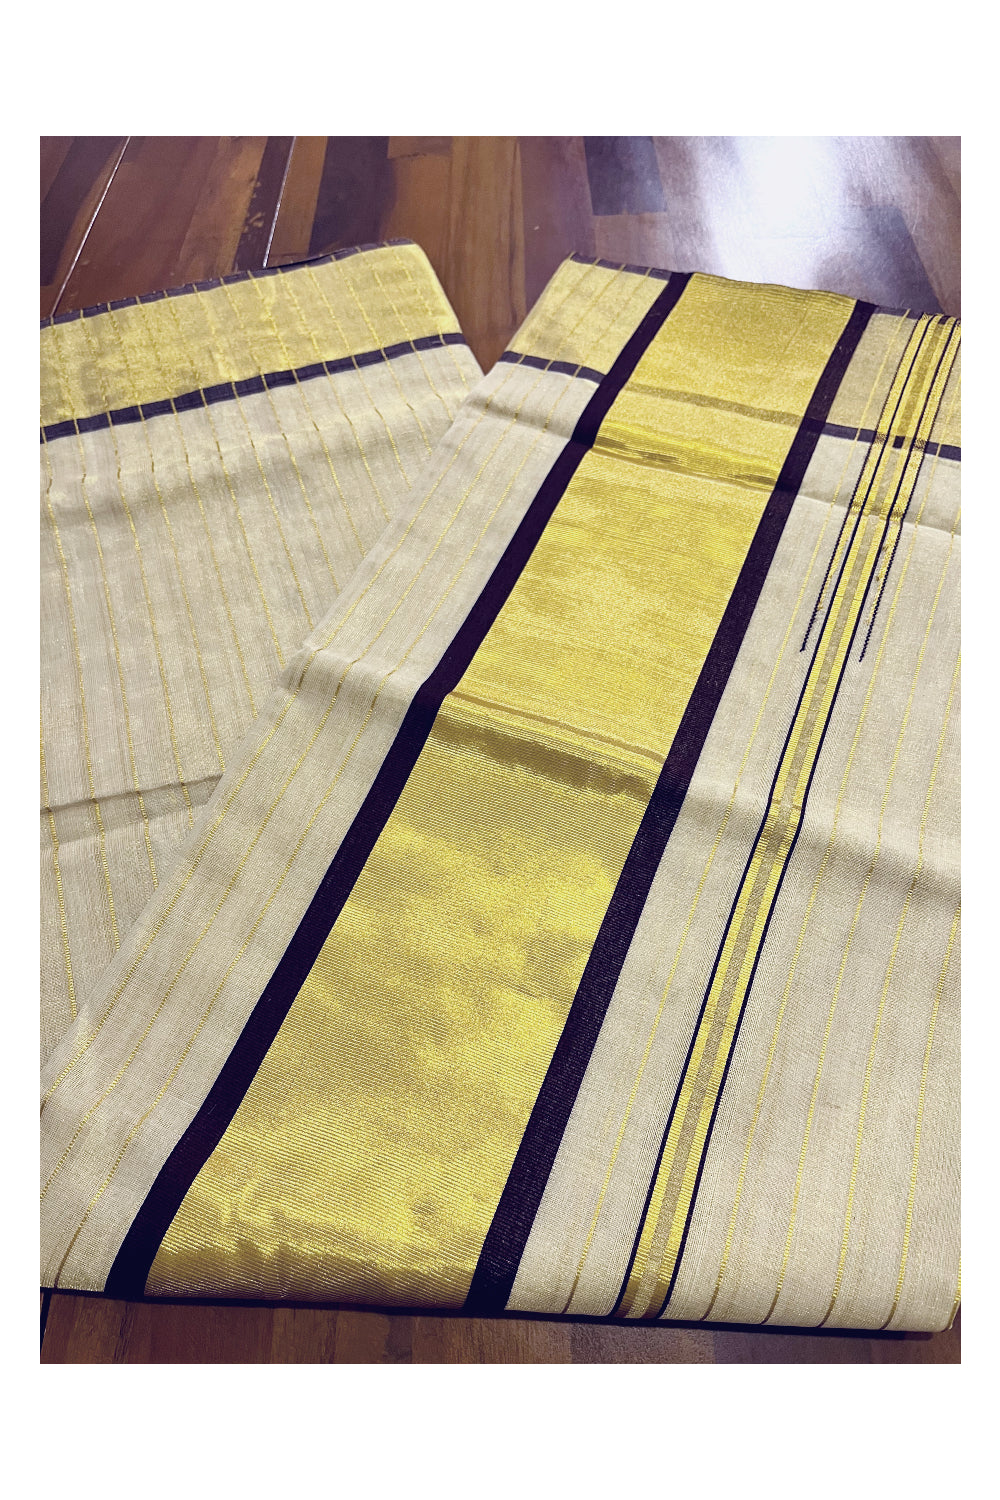 Southloom™ Premium Handloom Tissue Saree with Kasavu Lines Designs Across Body and Dark Brown Border